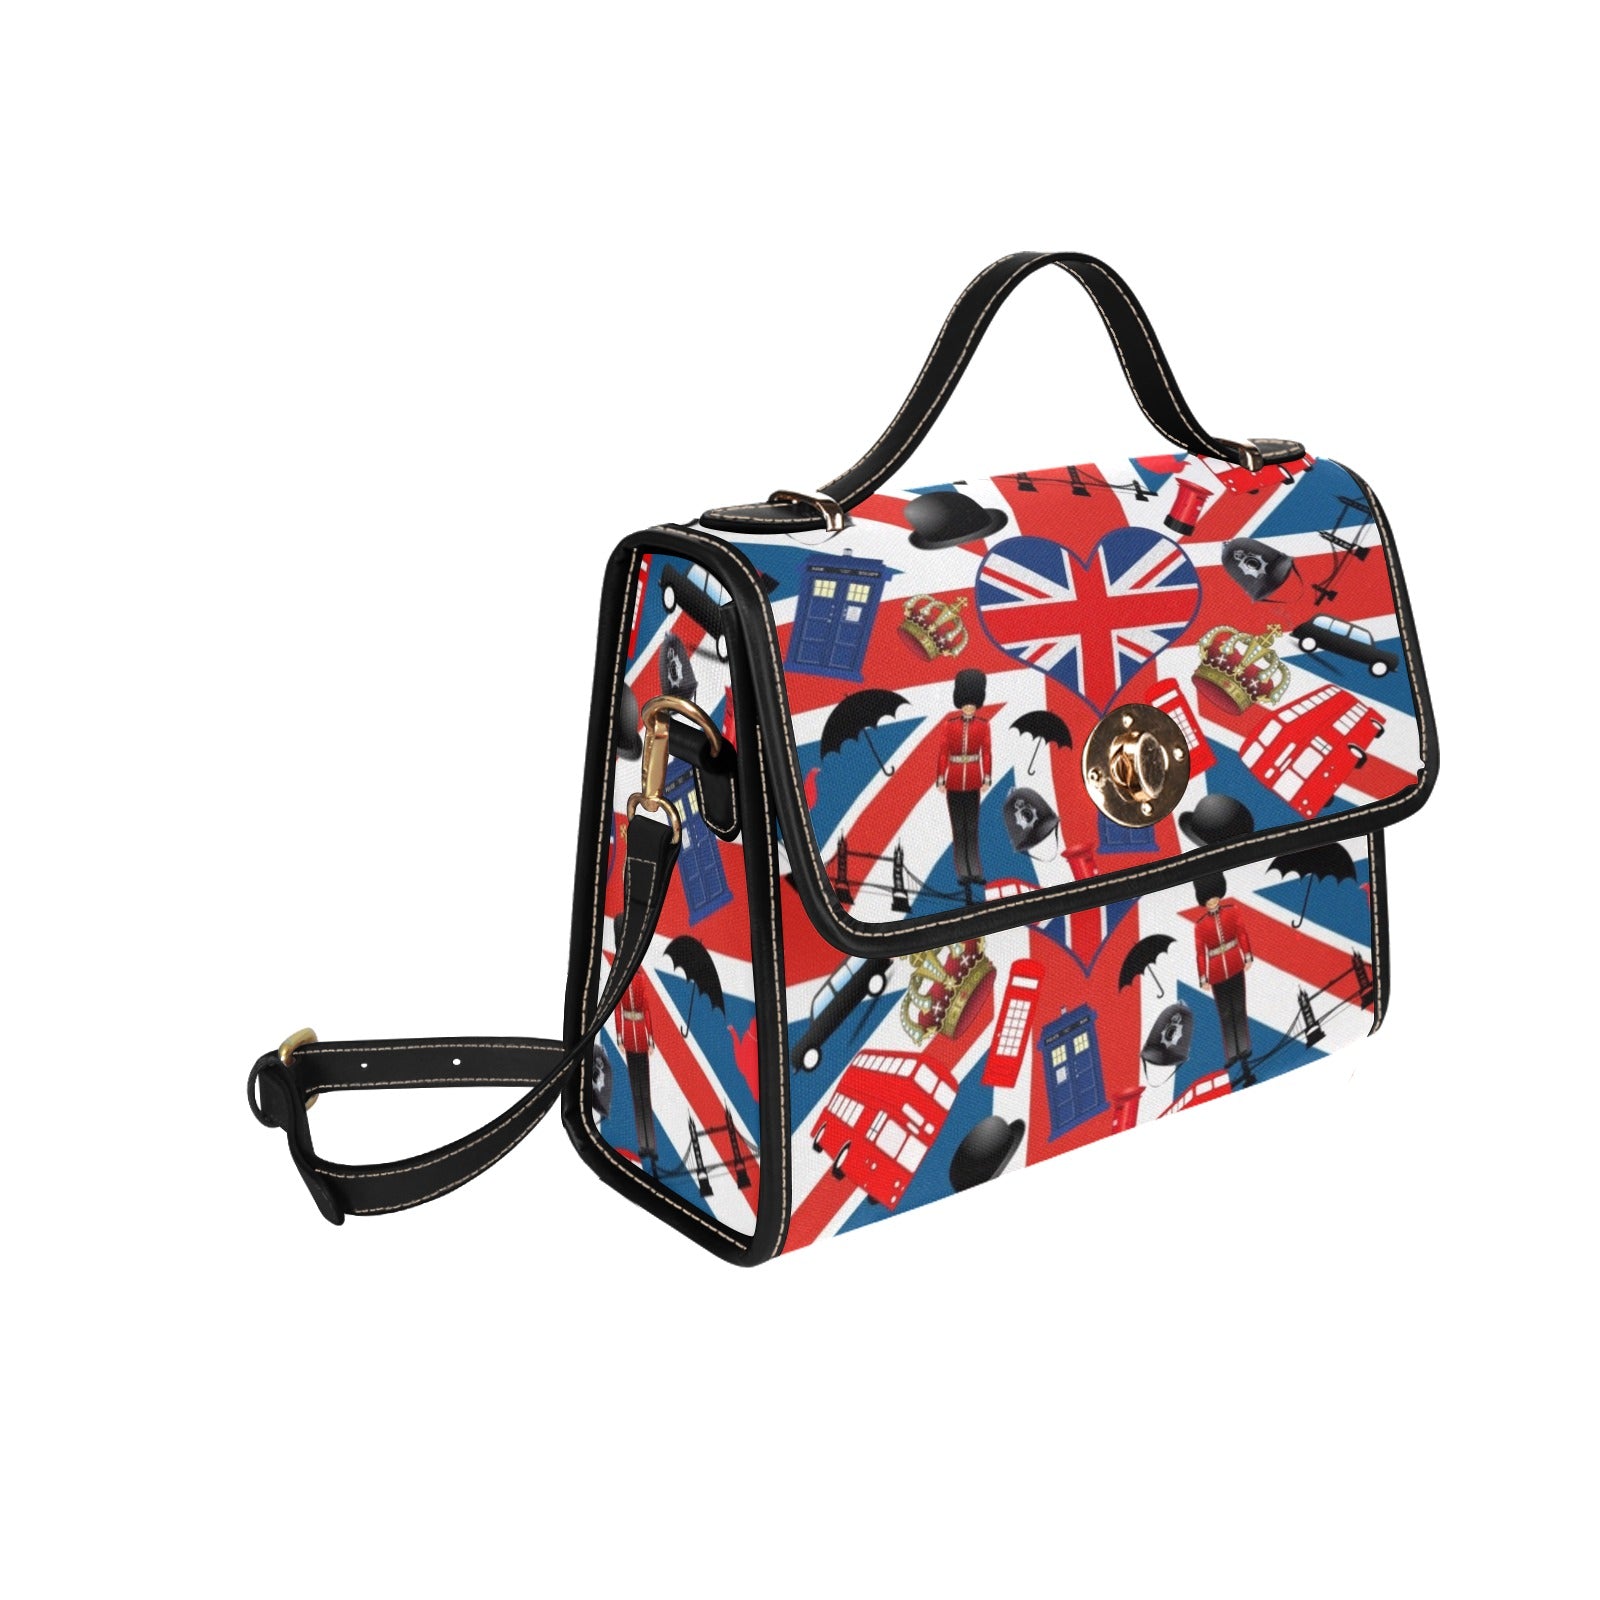 London - Waterproof Canvas Handbag